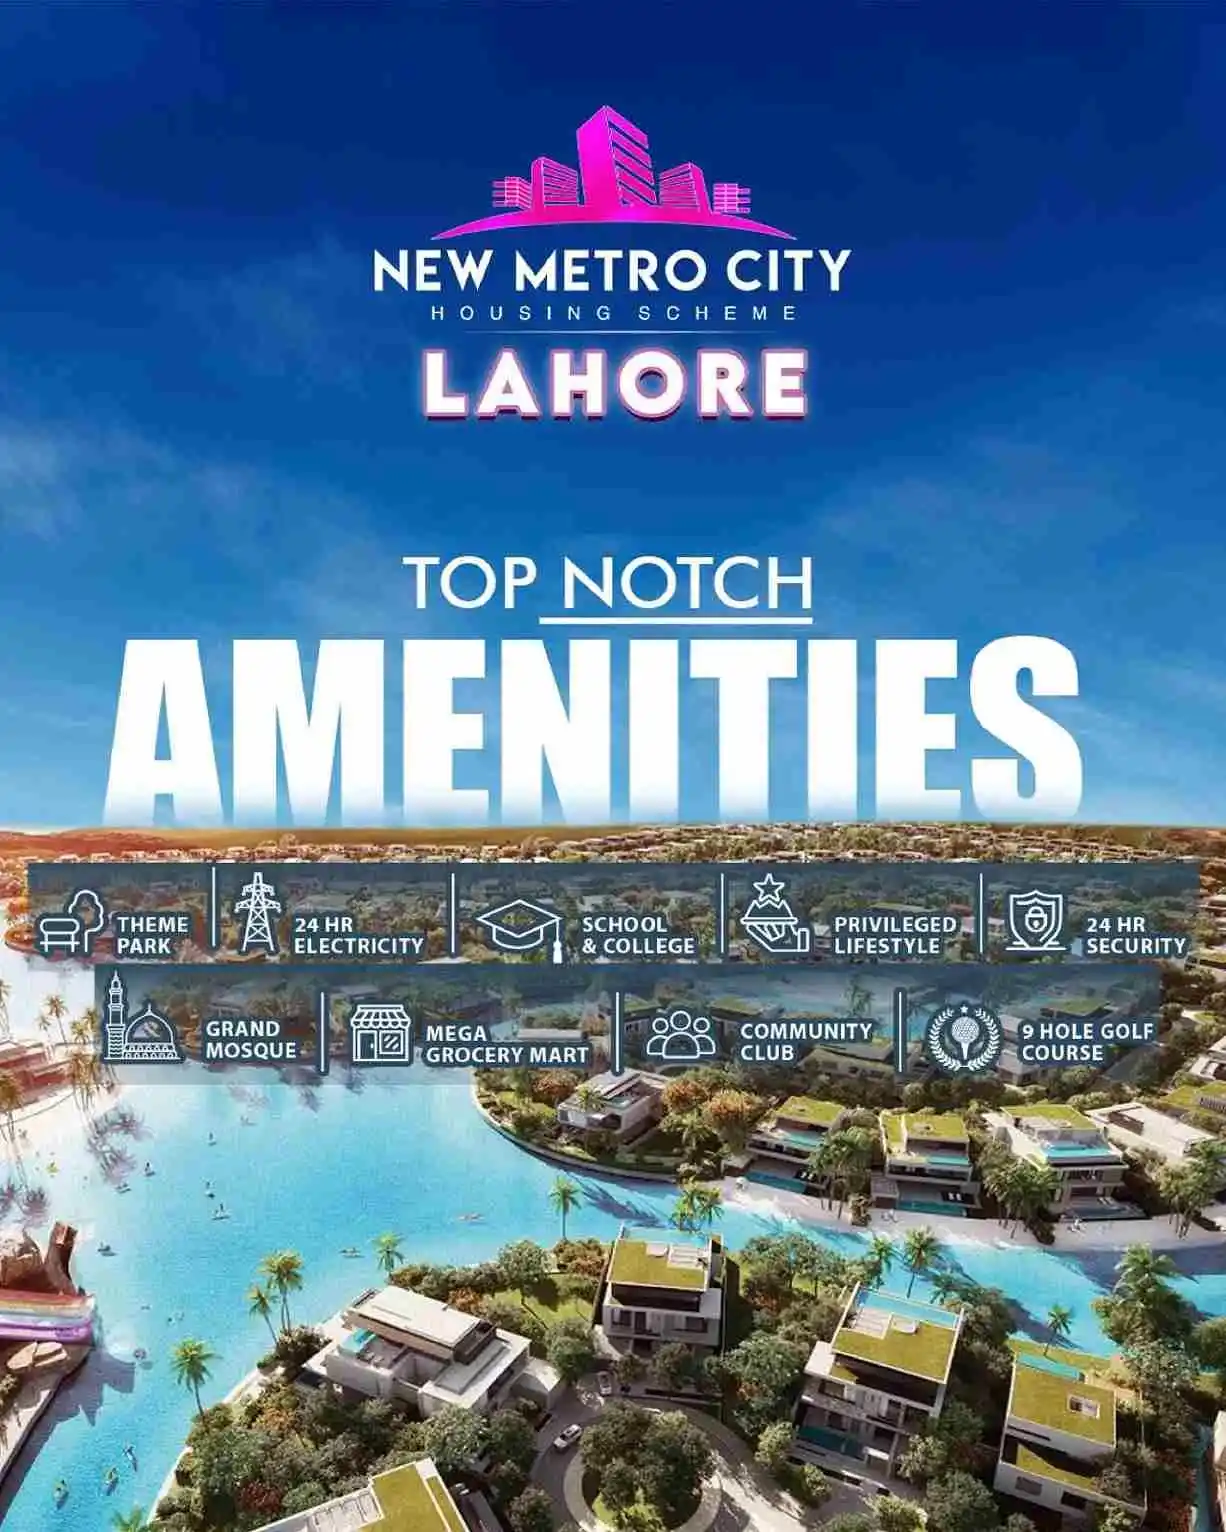 New Metro City Lahore Top Notch Amenities